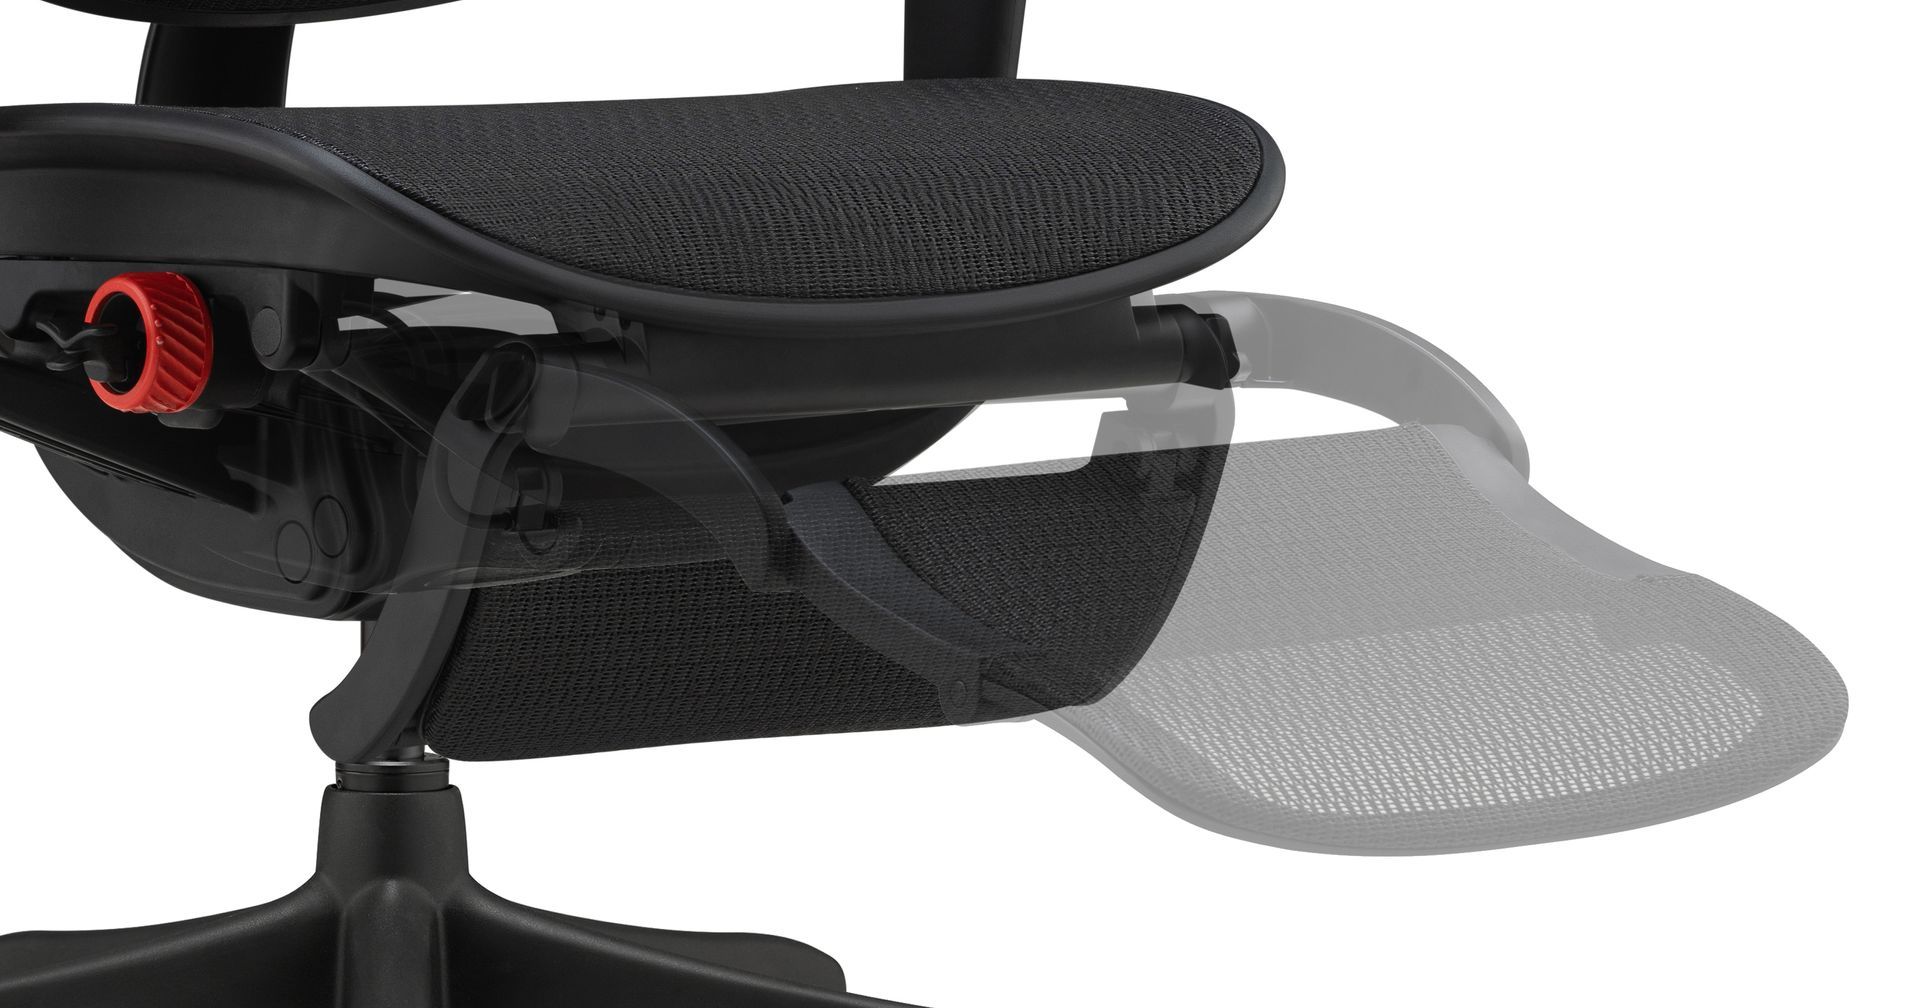 Enjoy Ultra gaming chair legrest folded under seat